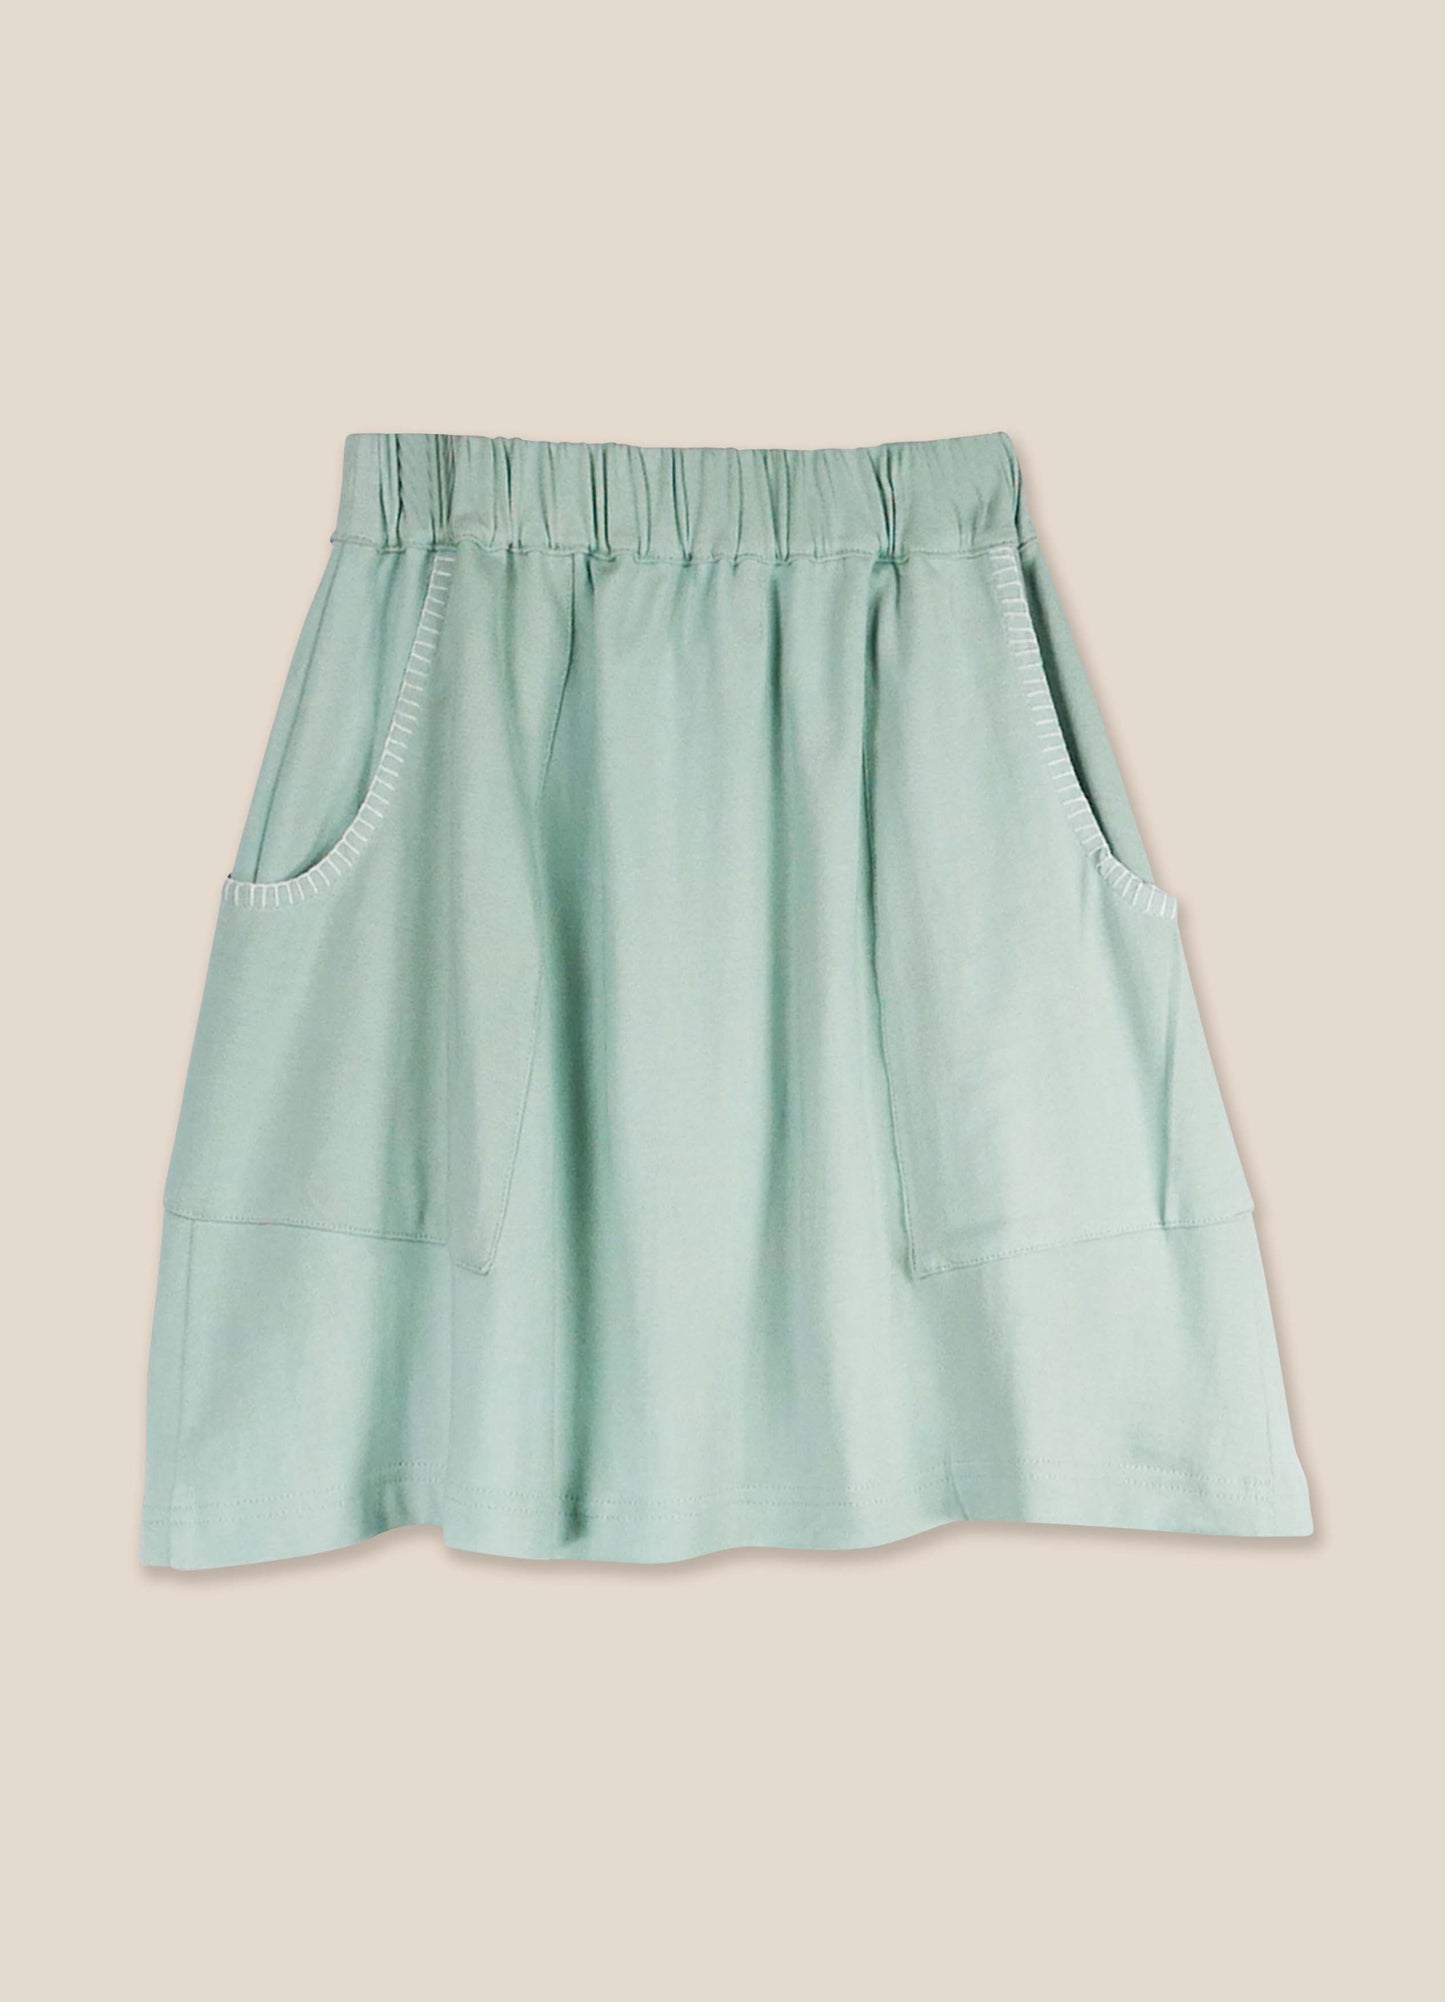 Skirt No. 27 Cameo Green